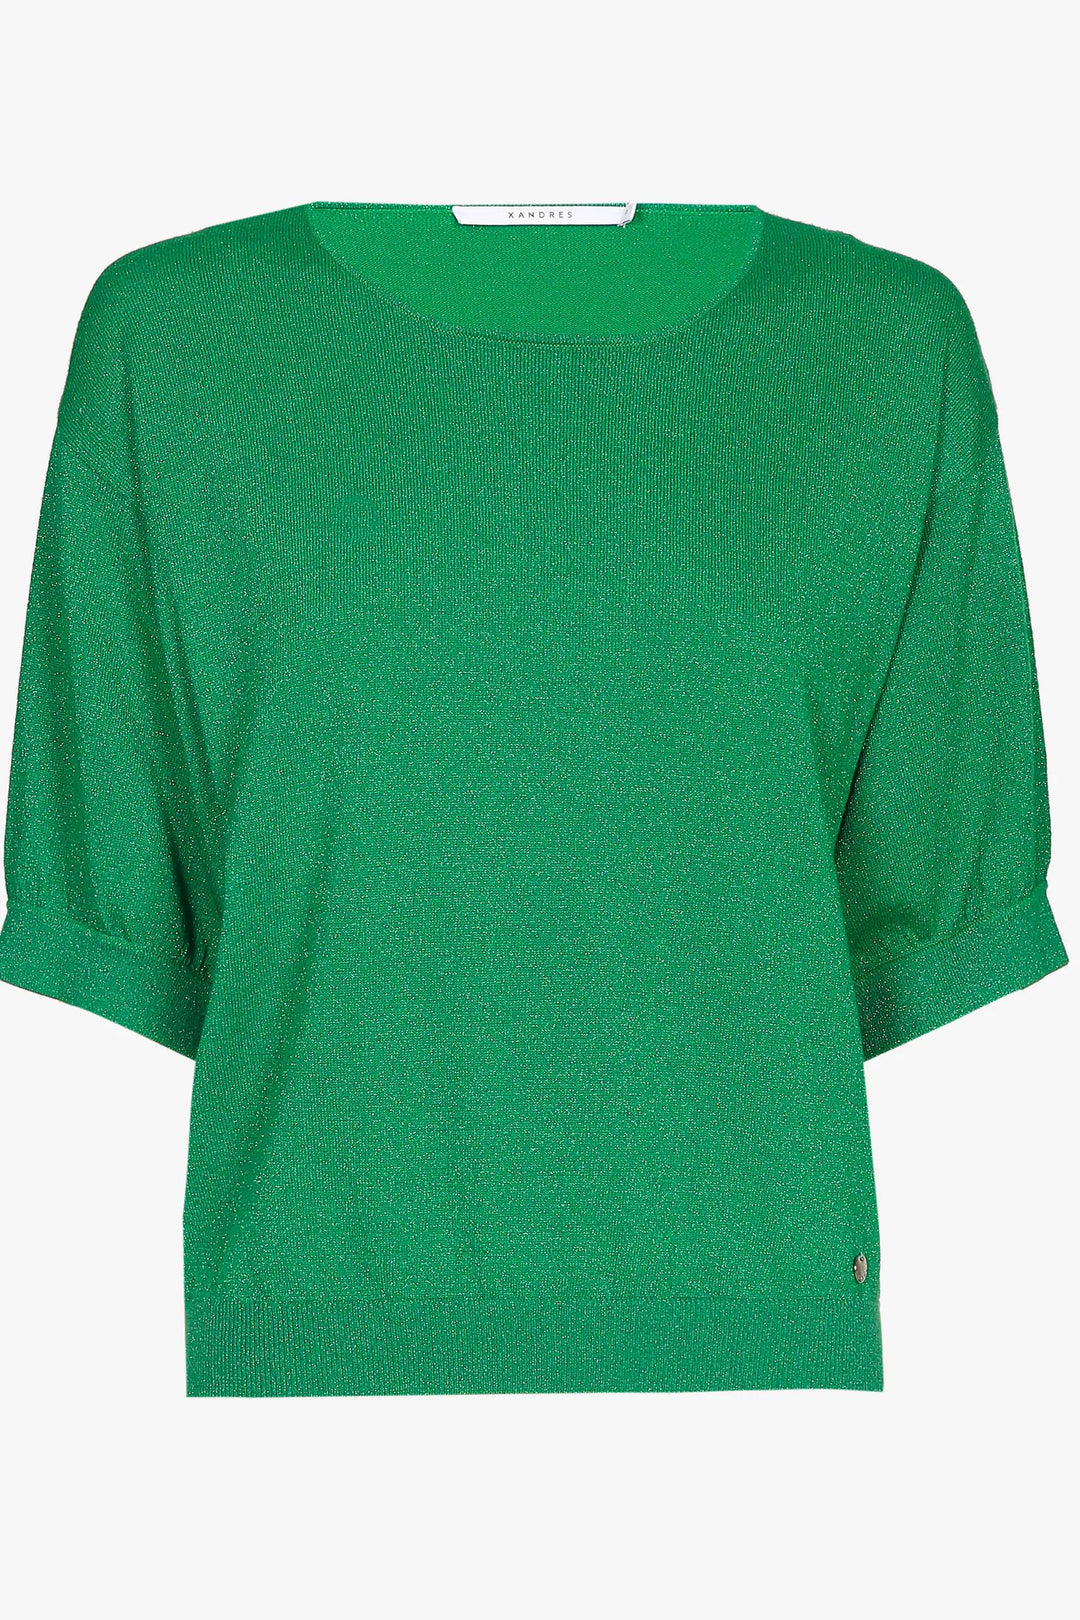 Irish green pulletje met lurex glansdraad - xandres - gulsum-groen - grote maten - dameskleding - kledingwinkel - herent - leuven